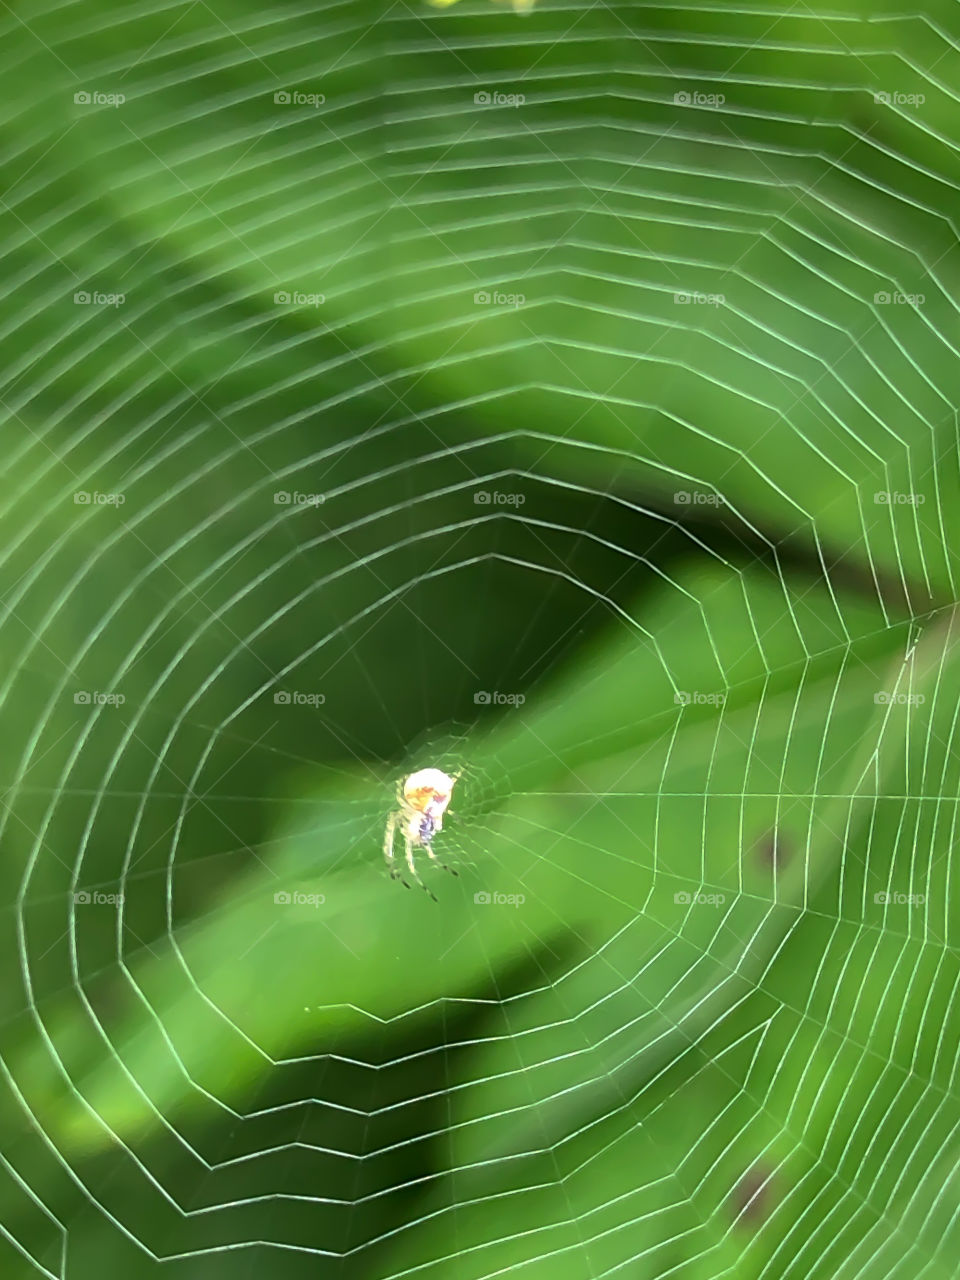 Spider web - artwork of nature 